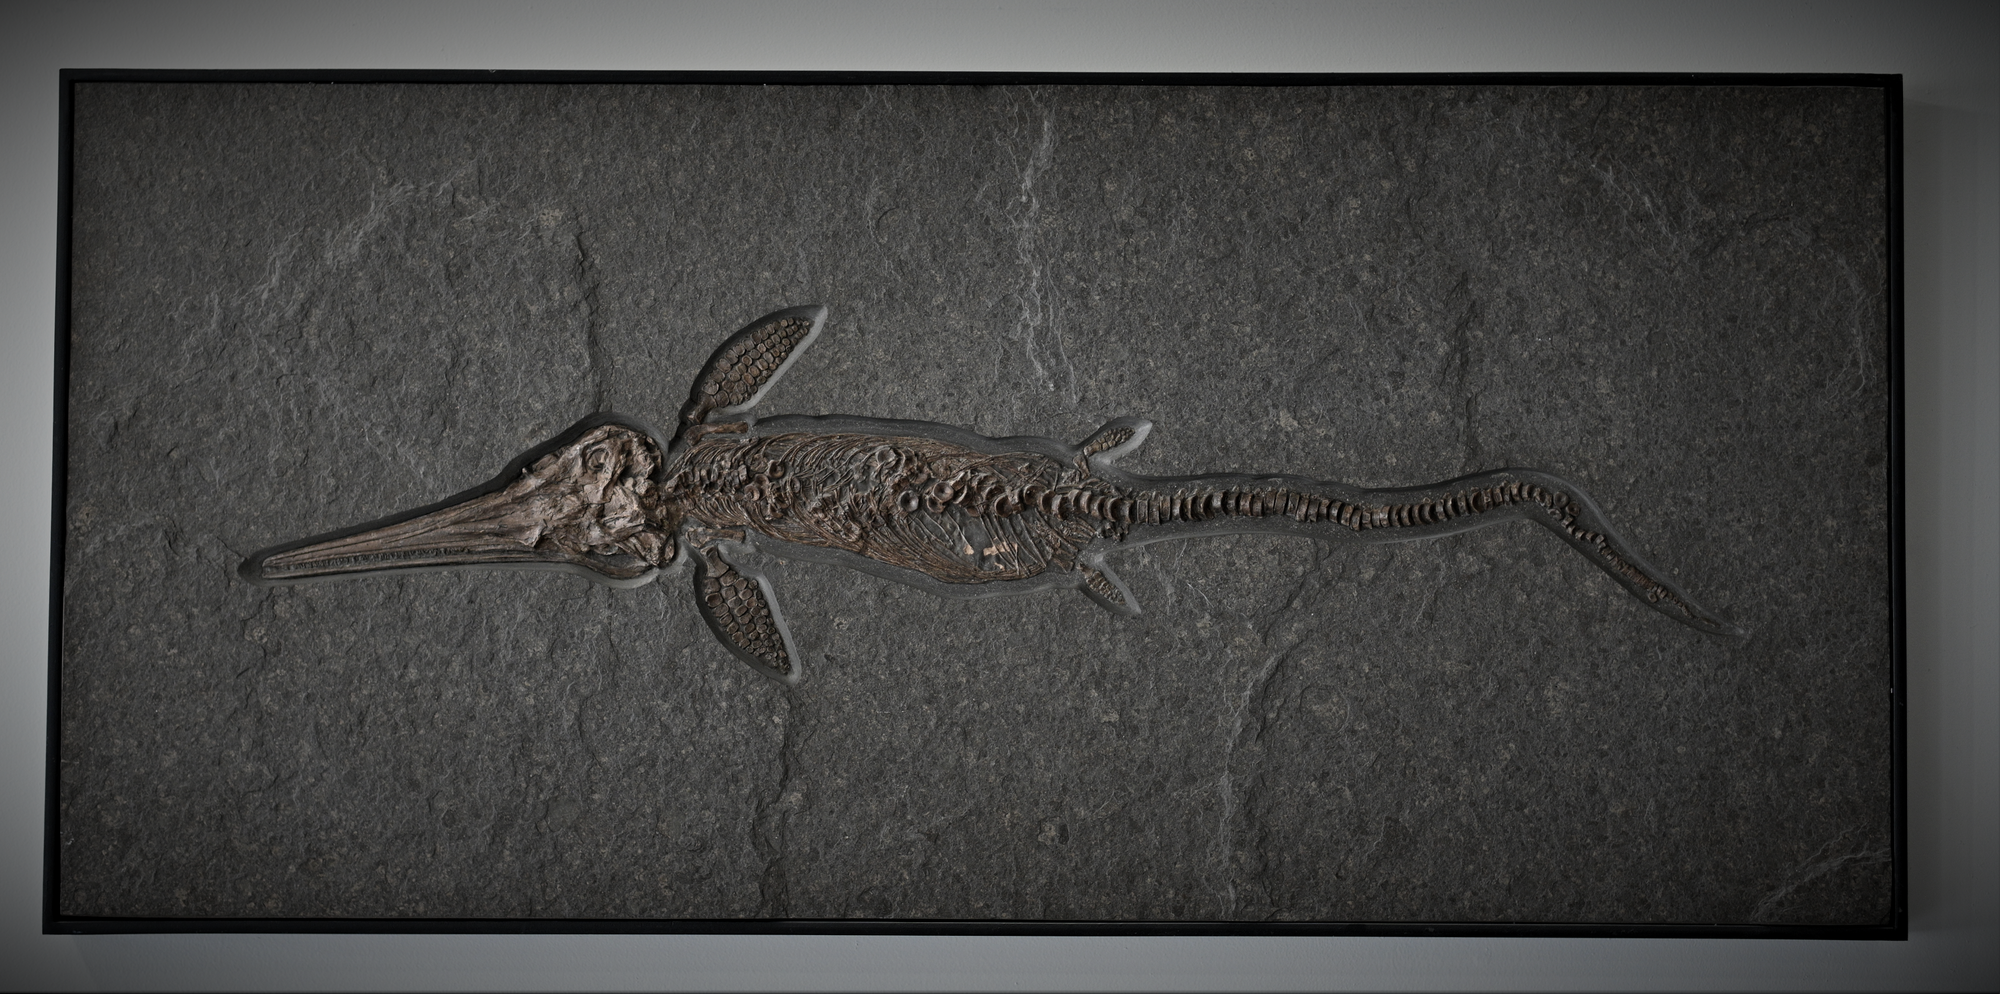 Juvenile Ichthyosaur fossil from Holzmaden Germany, Jurassic aged ancient sea life.